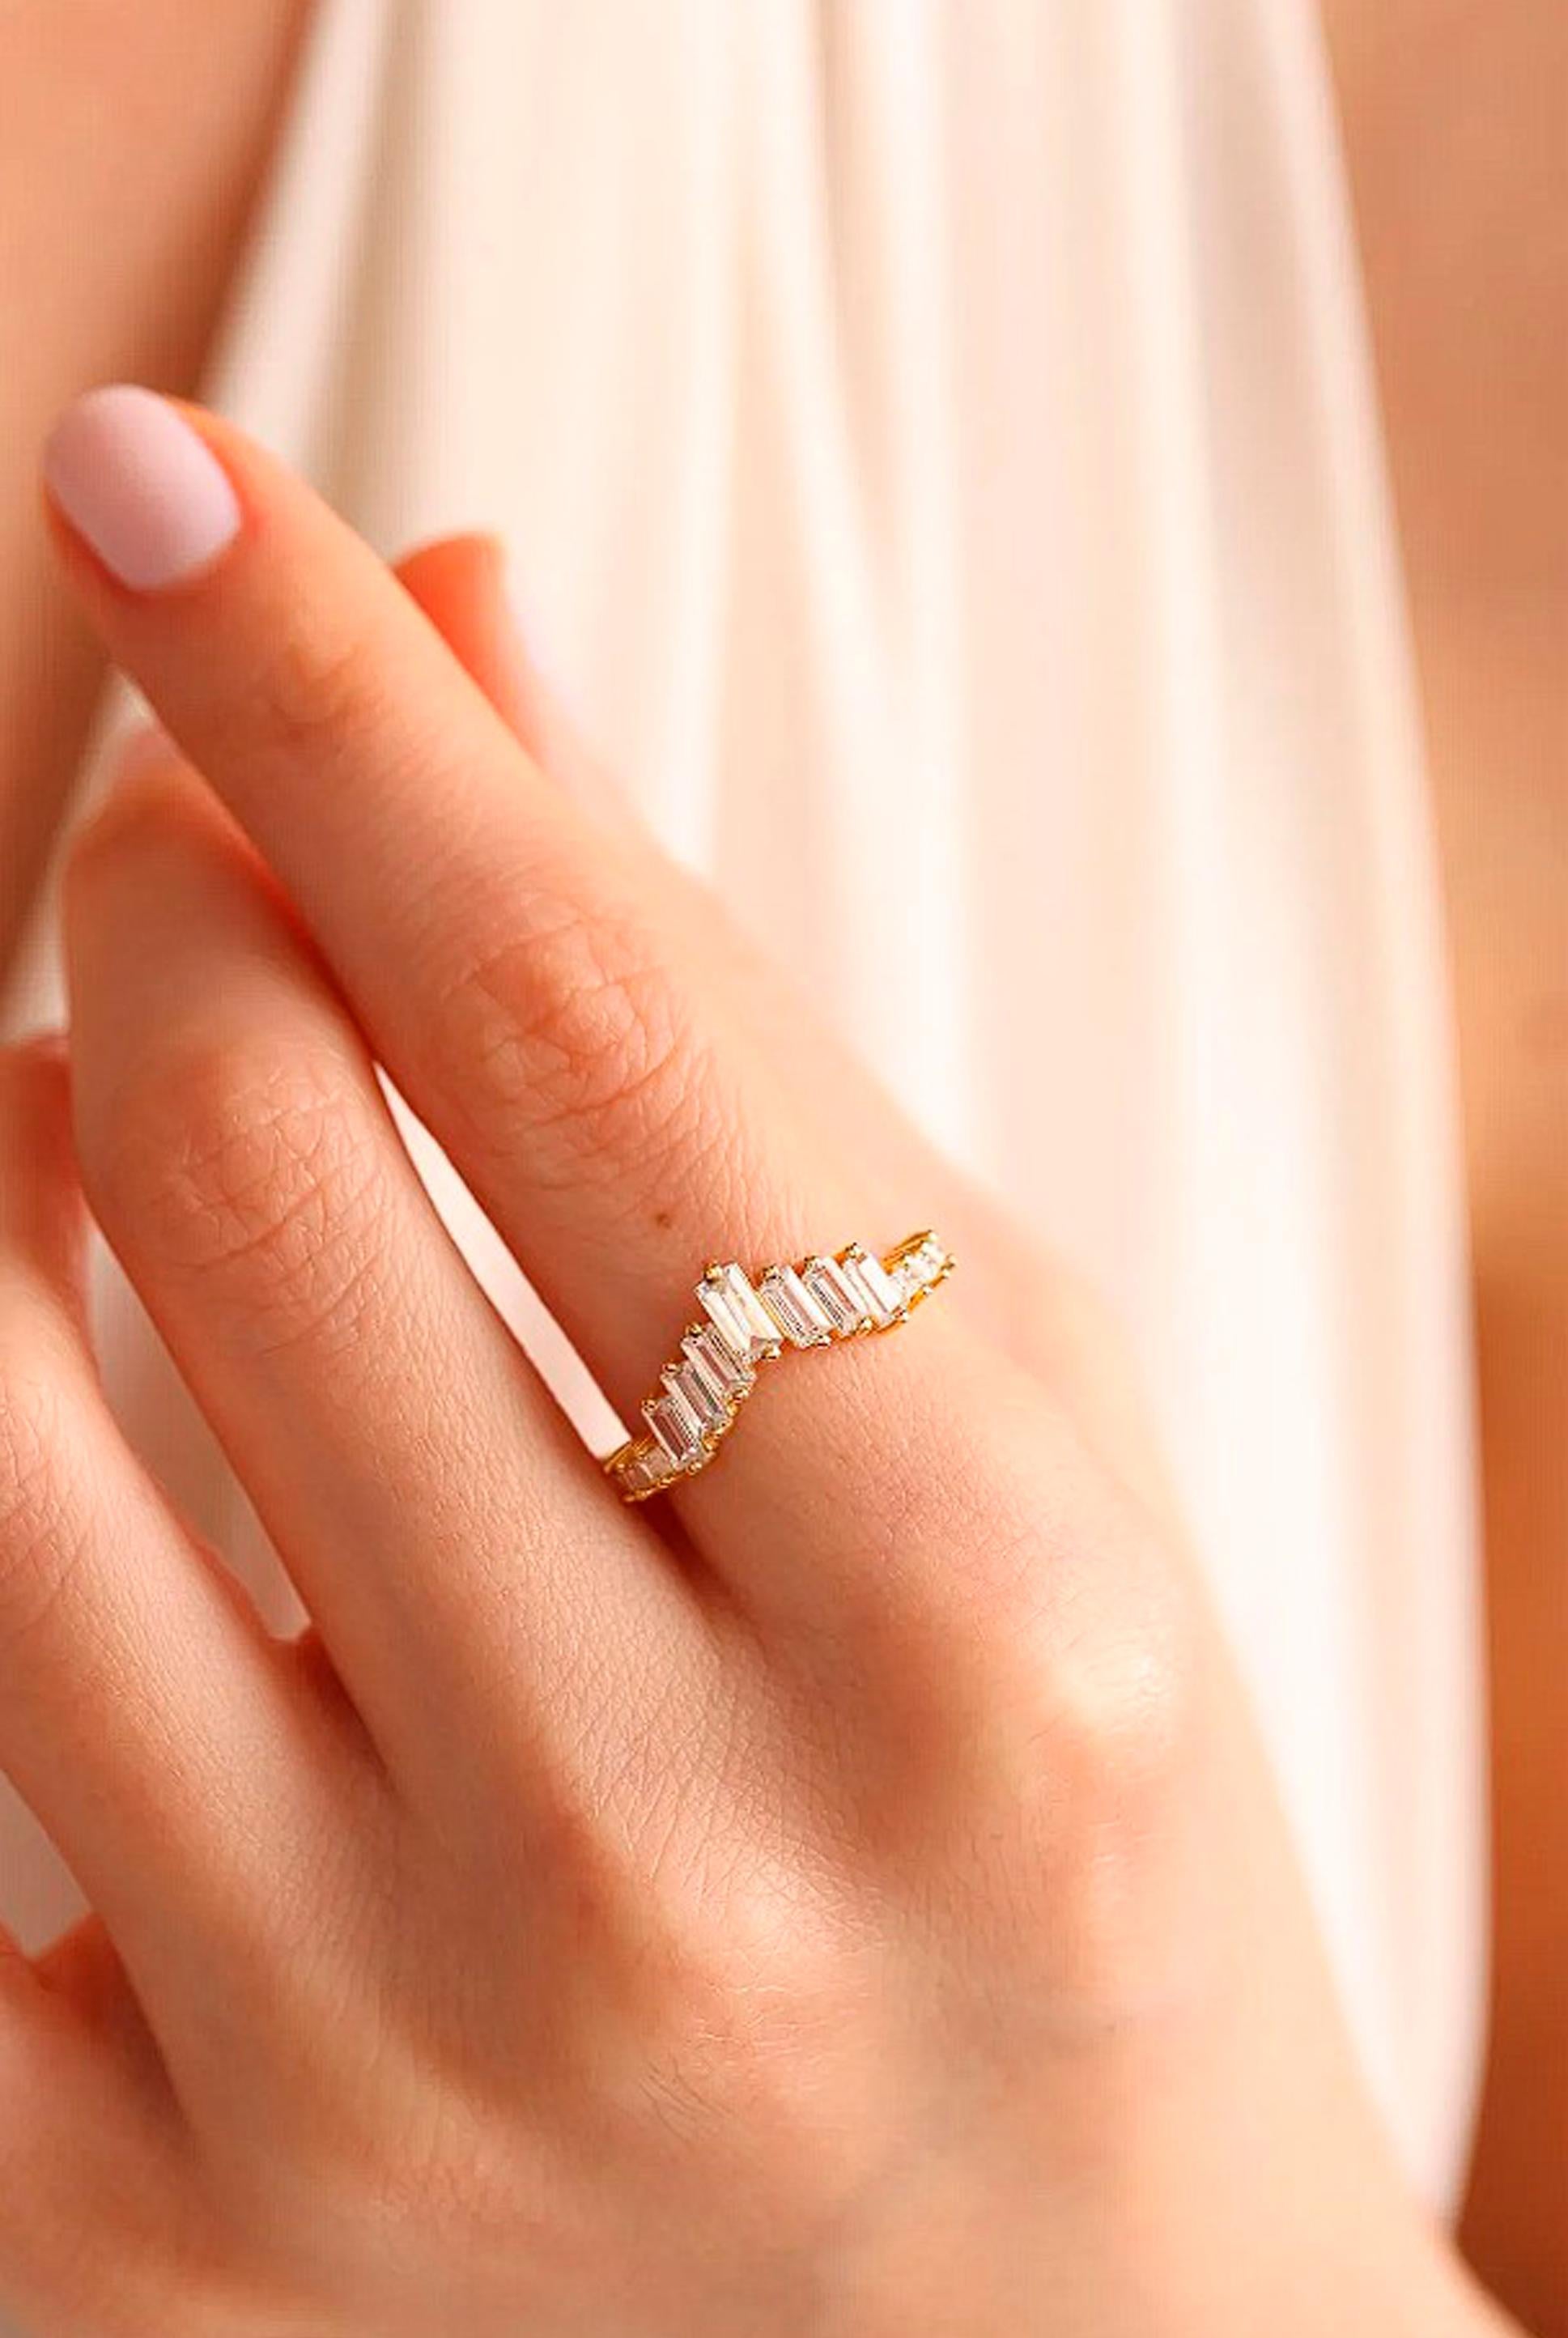 For Sale:  Baguette cut moissanite 14k gold engagement ring. 5